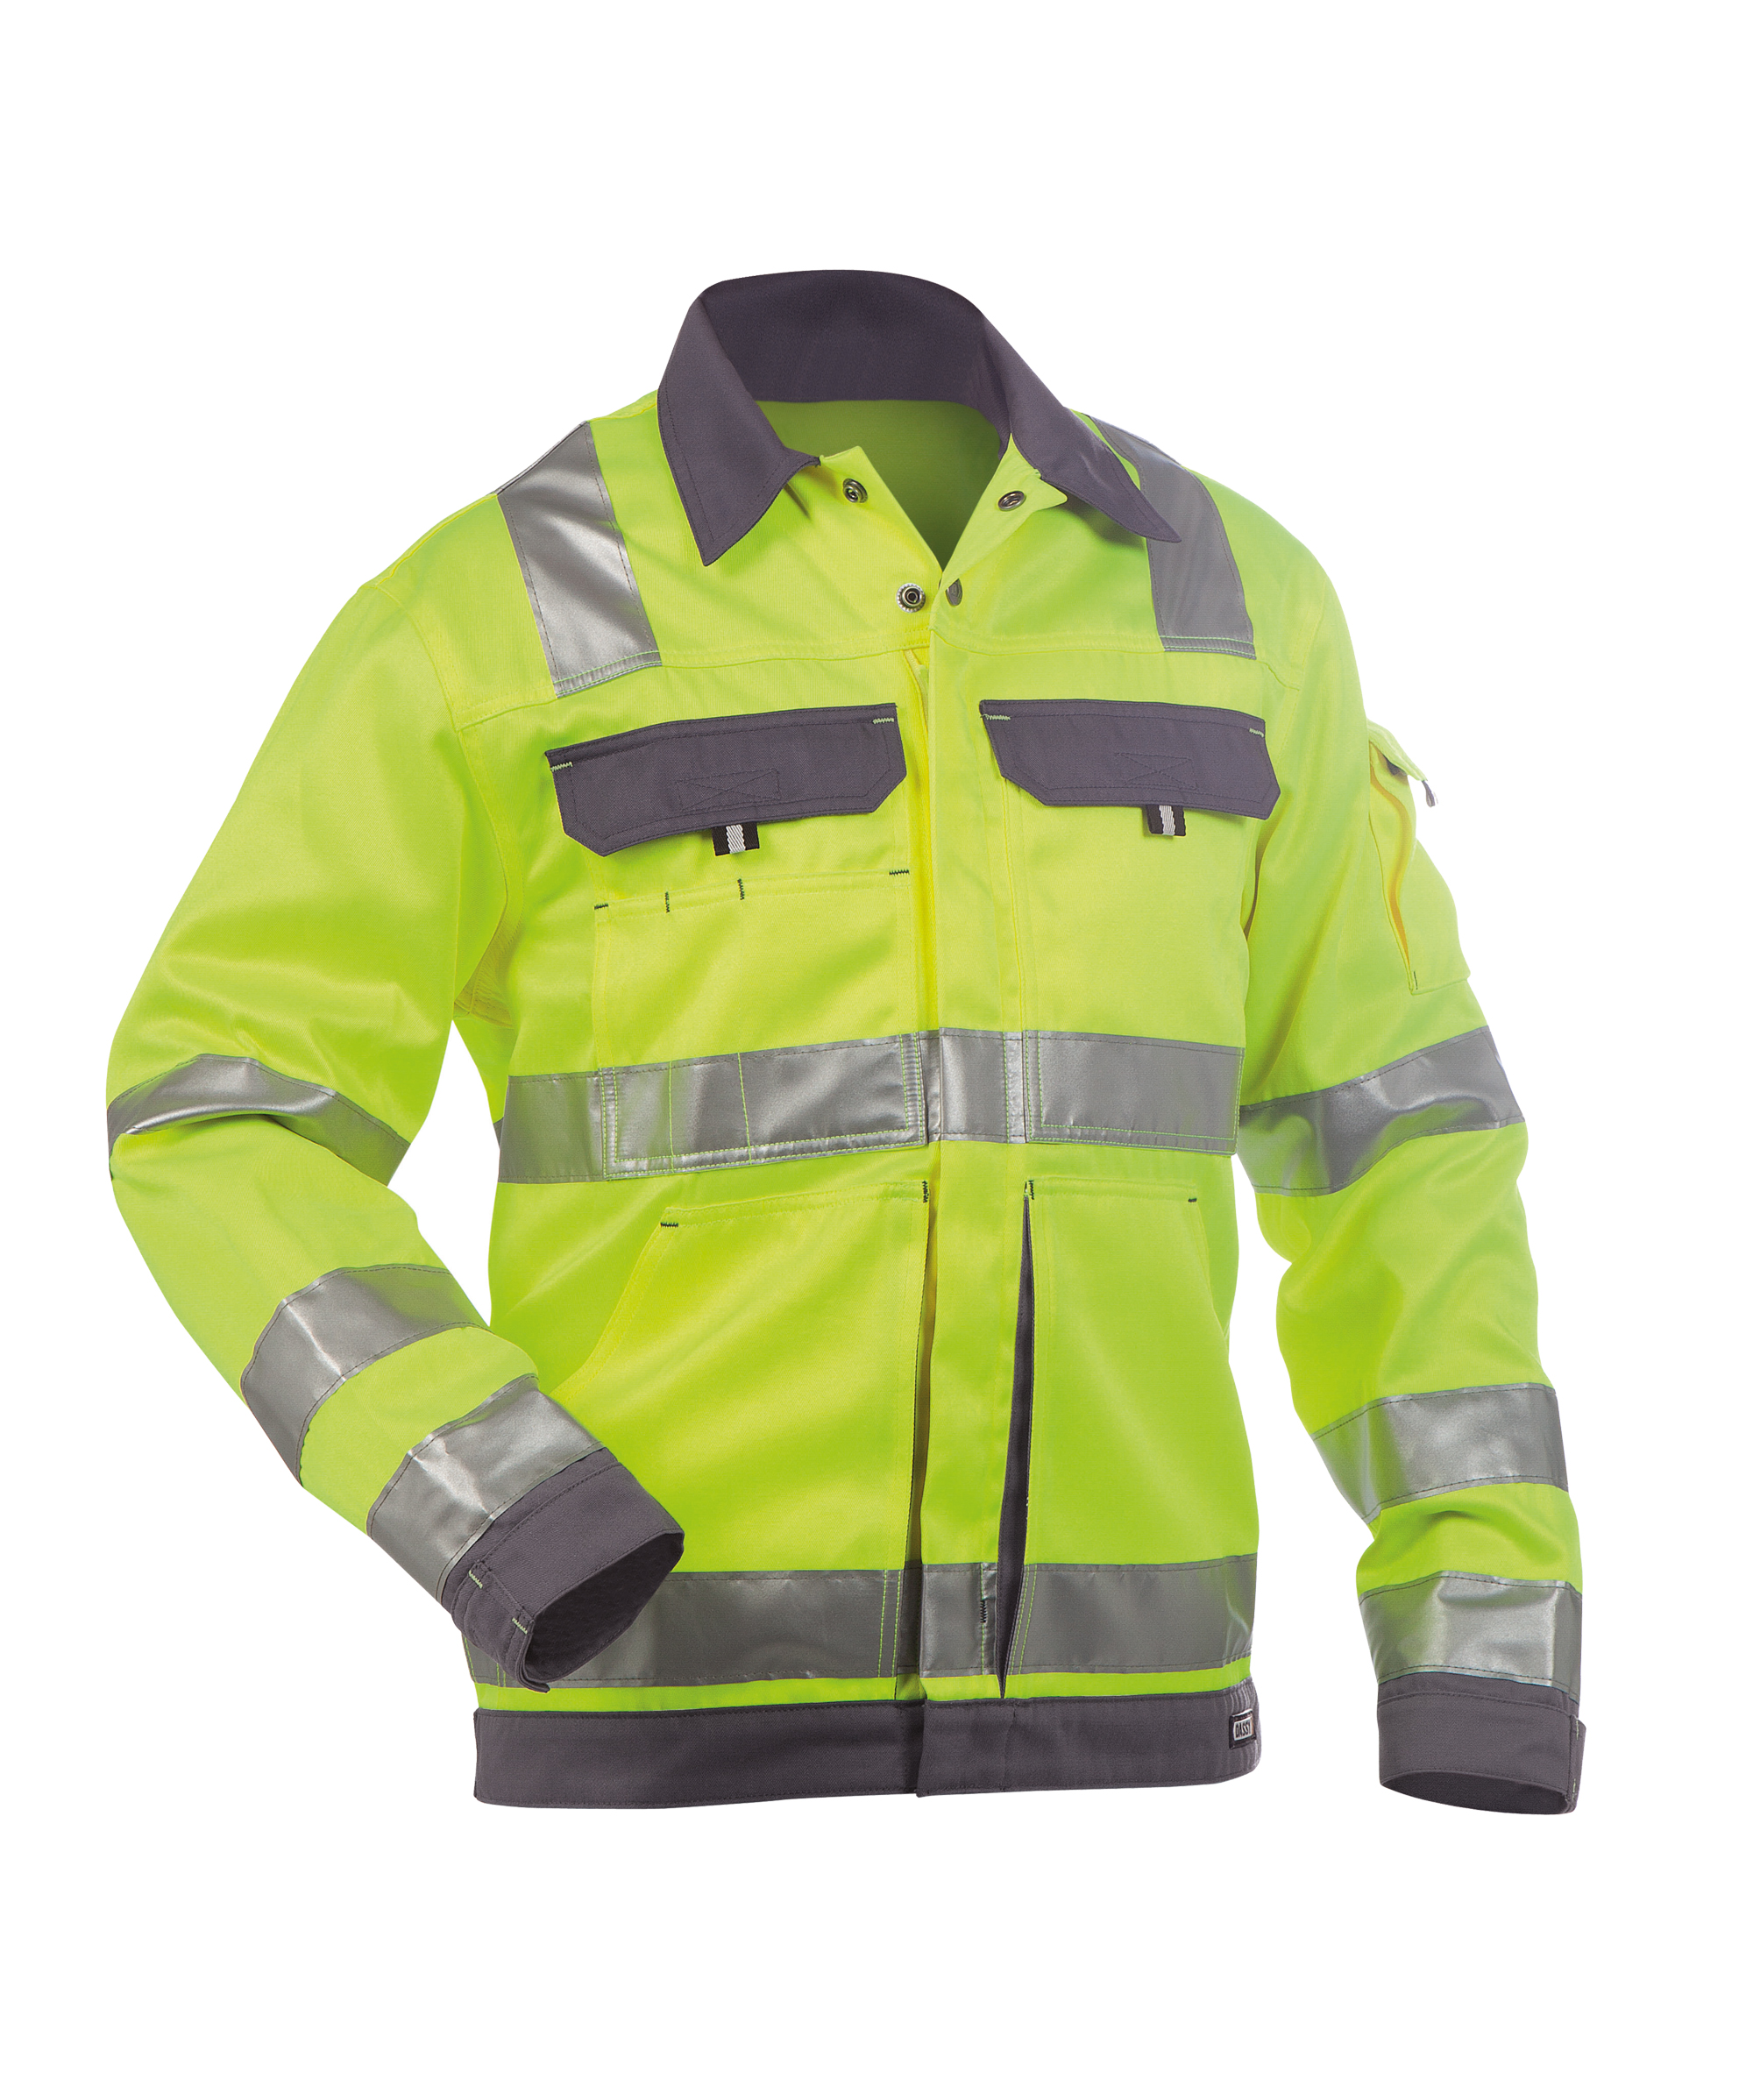 dusseldorf_high-visibility-work-jacket_fluo-yellow-cement-grey_front.jpg